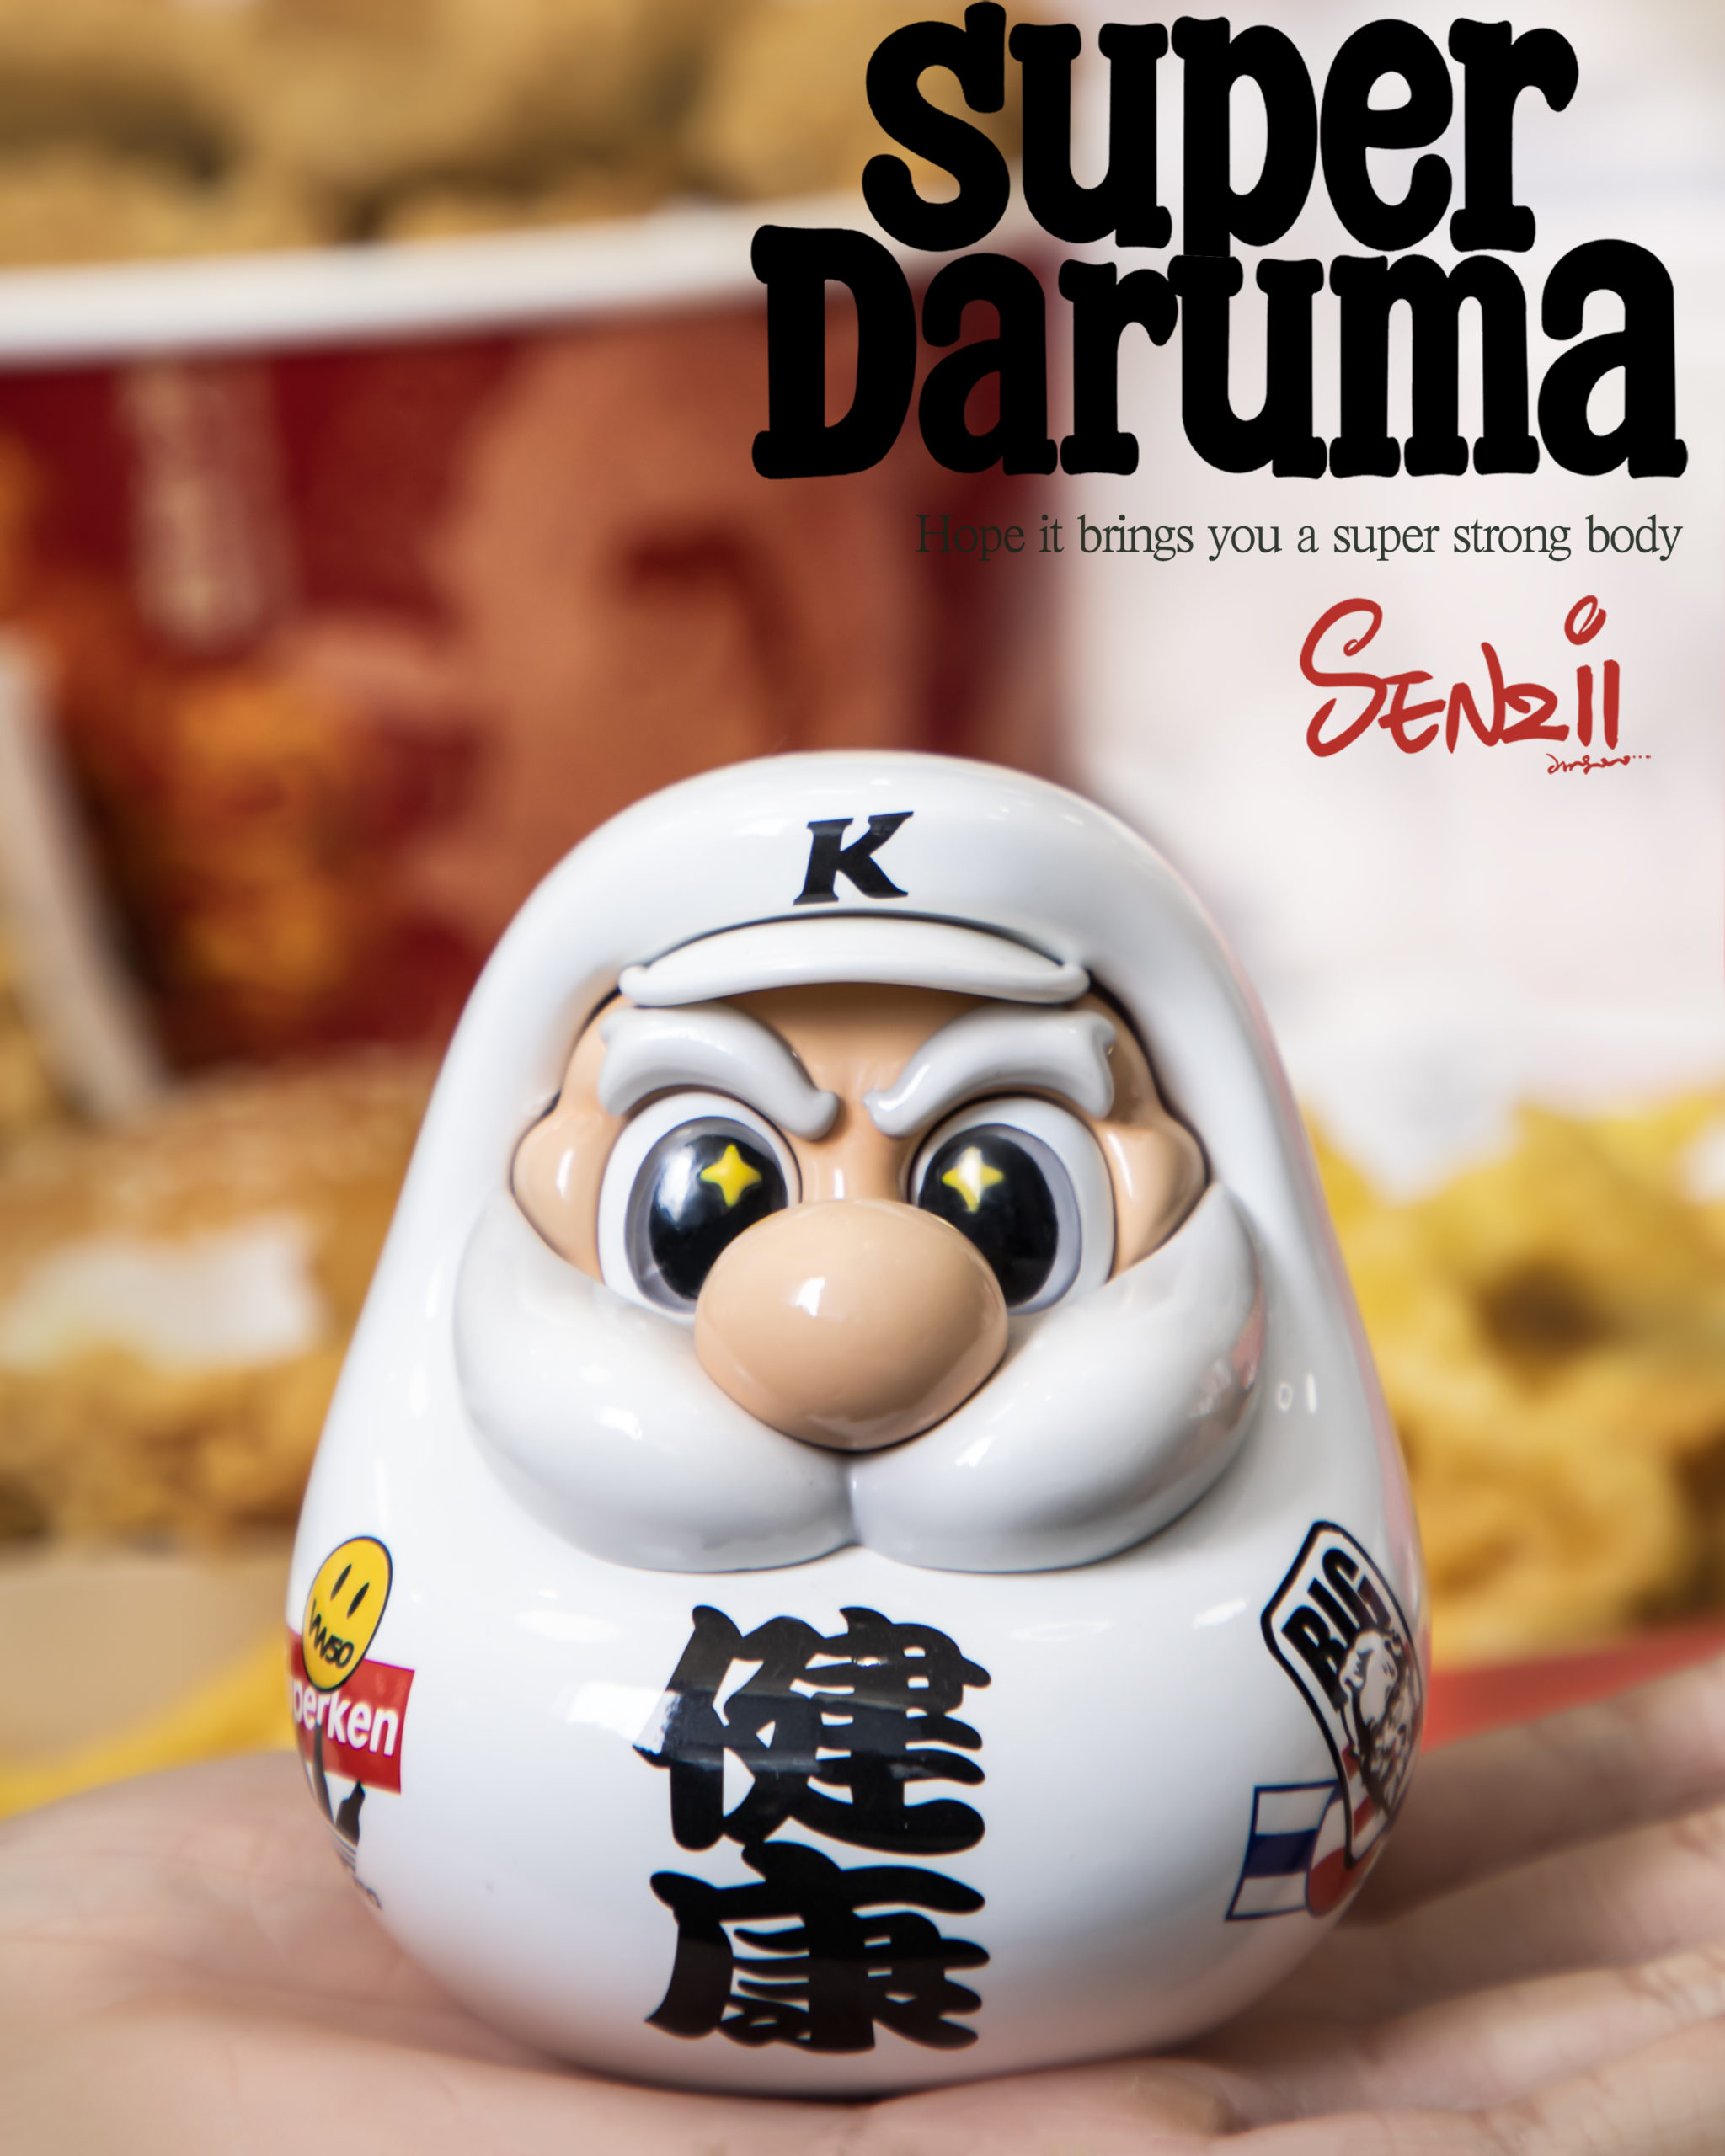 |Toy・Cargo| Super Daruma - K Healthy - Toy・Cargo ユニークなおもちゃの販売サイト